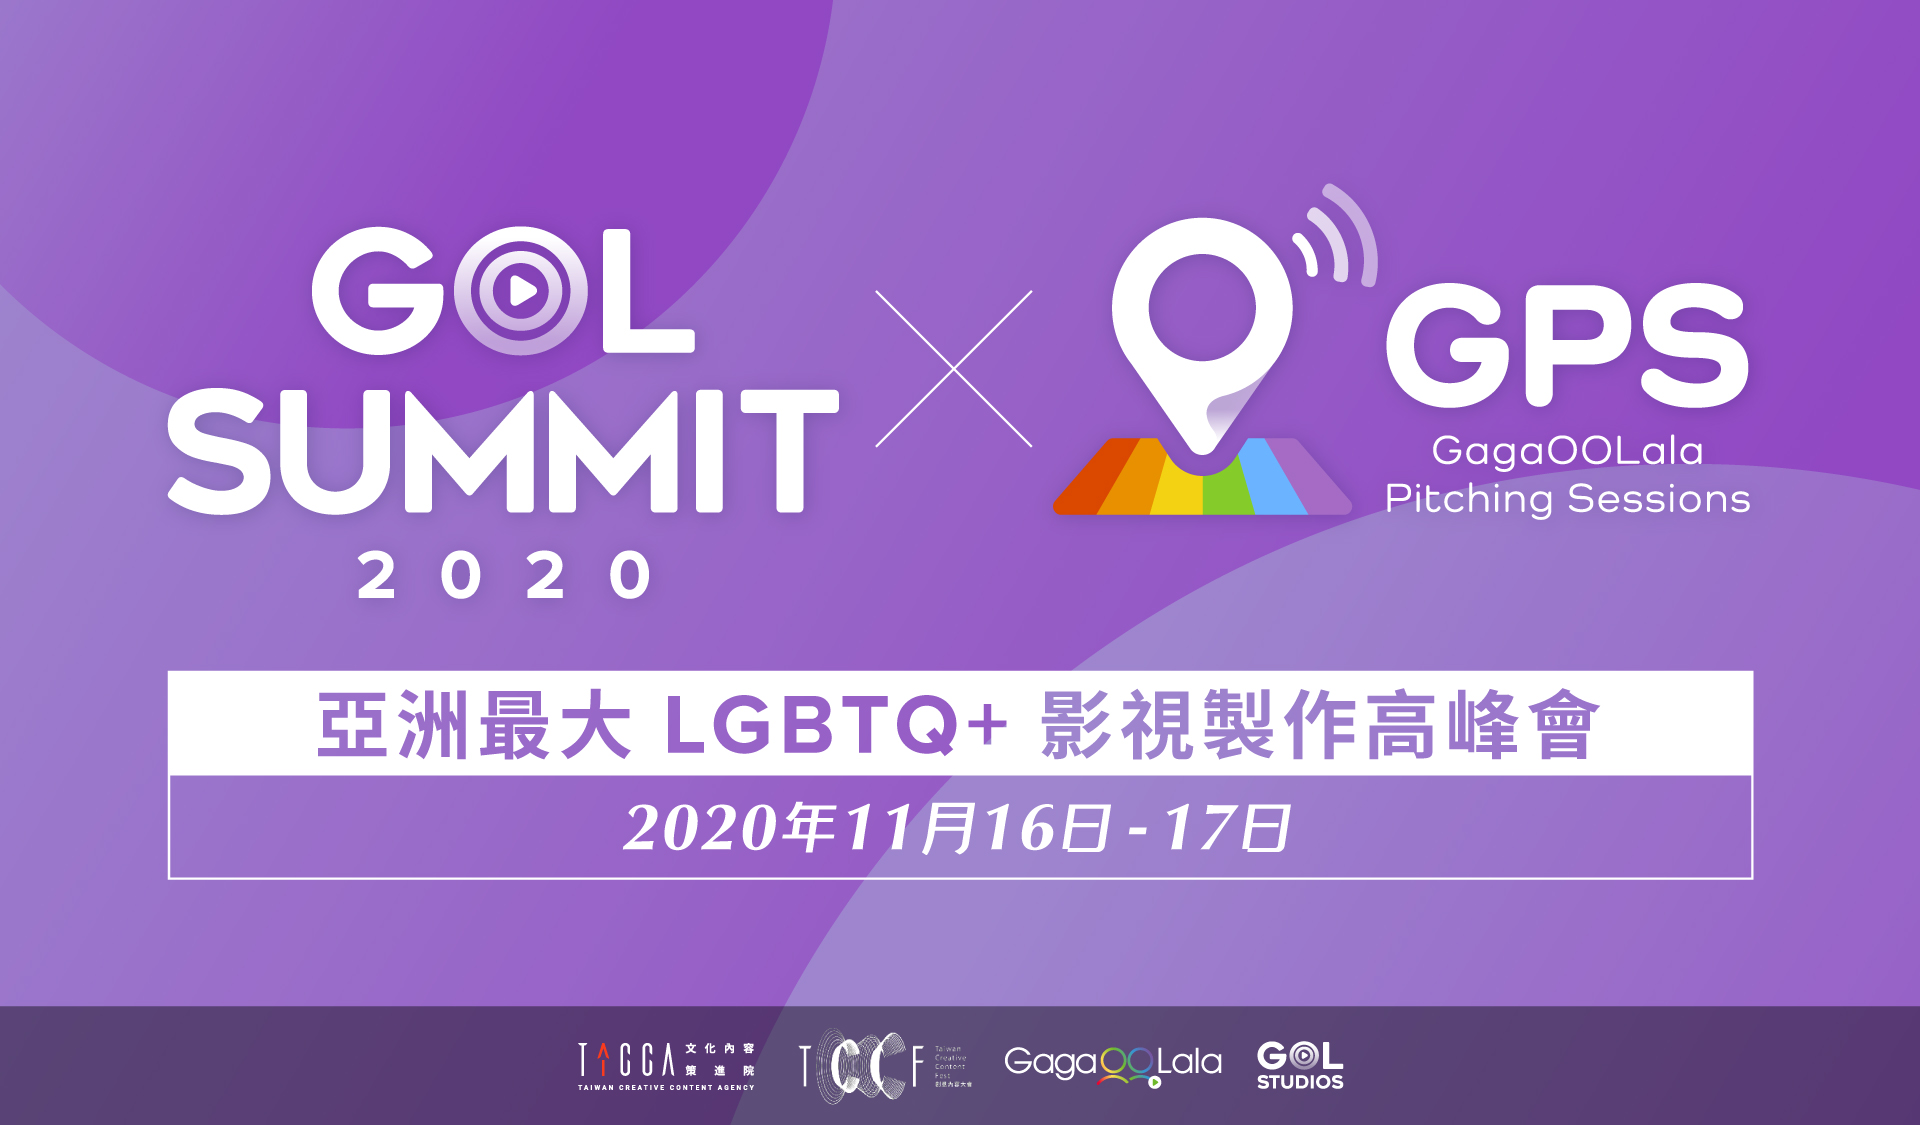 「2020 GOL SUMMIT 高峰會」與文策院合作舉辦國際提案大會                            百萬獎金徵求潛力LGBTQ+ 影視作品與國際合製企劃